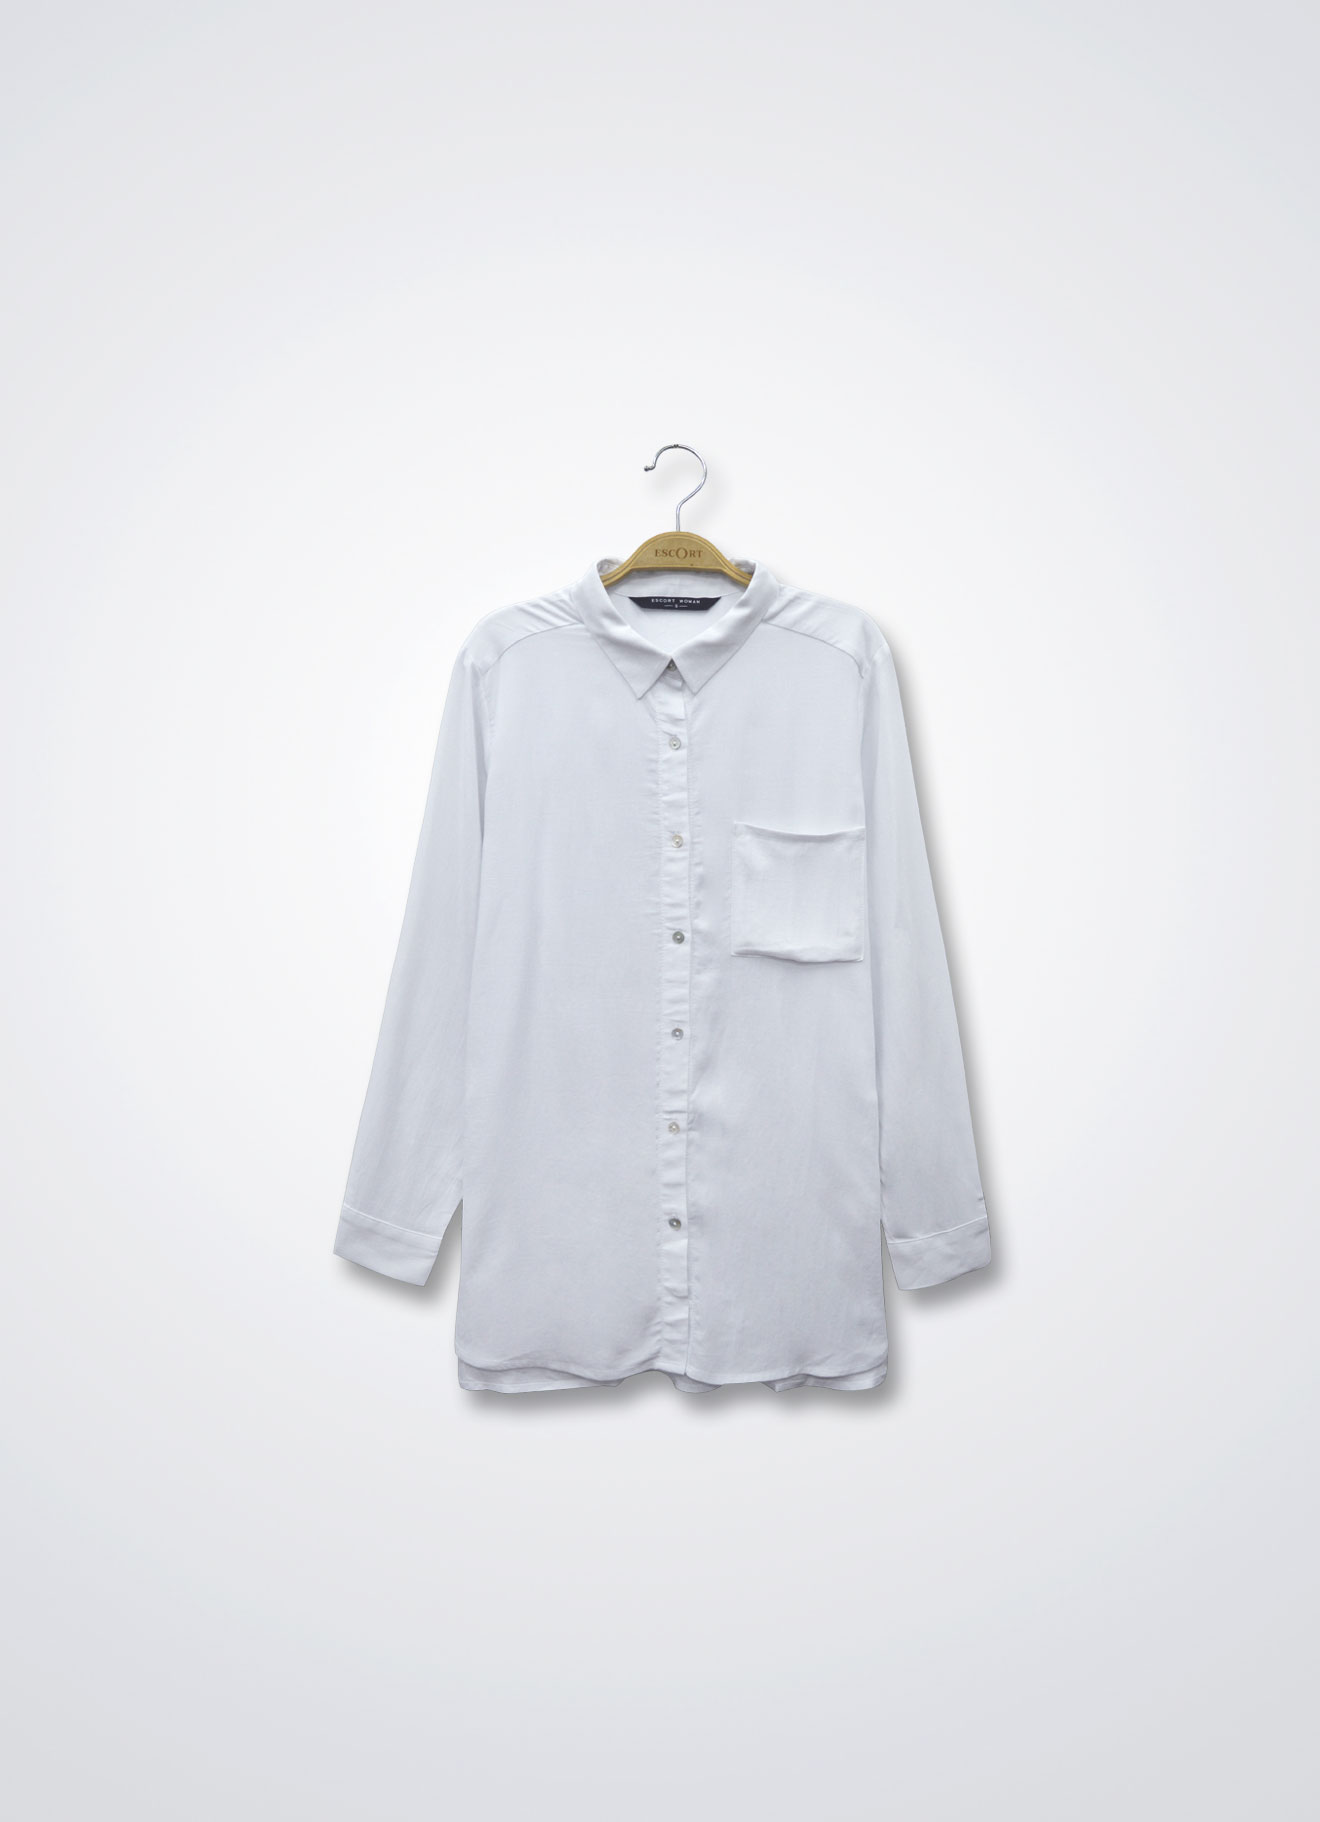 Blanc-de-Blanc by Shirt